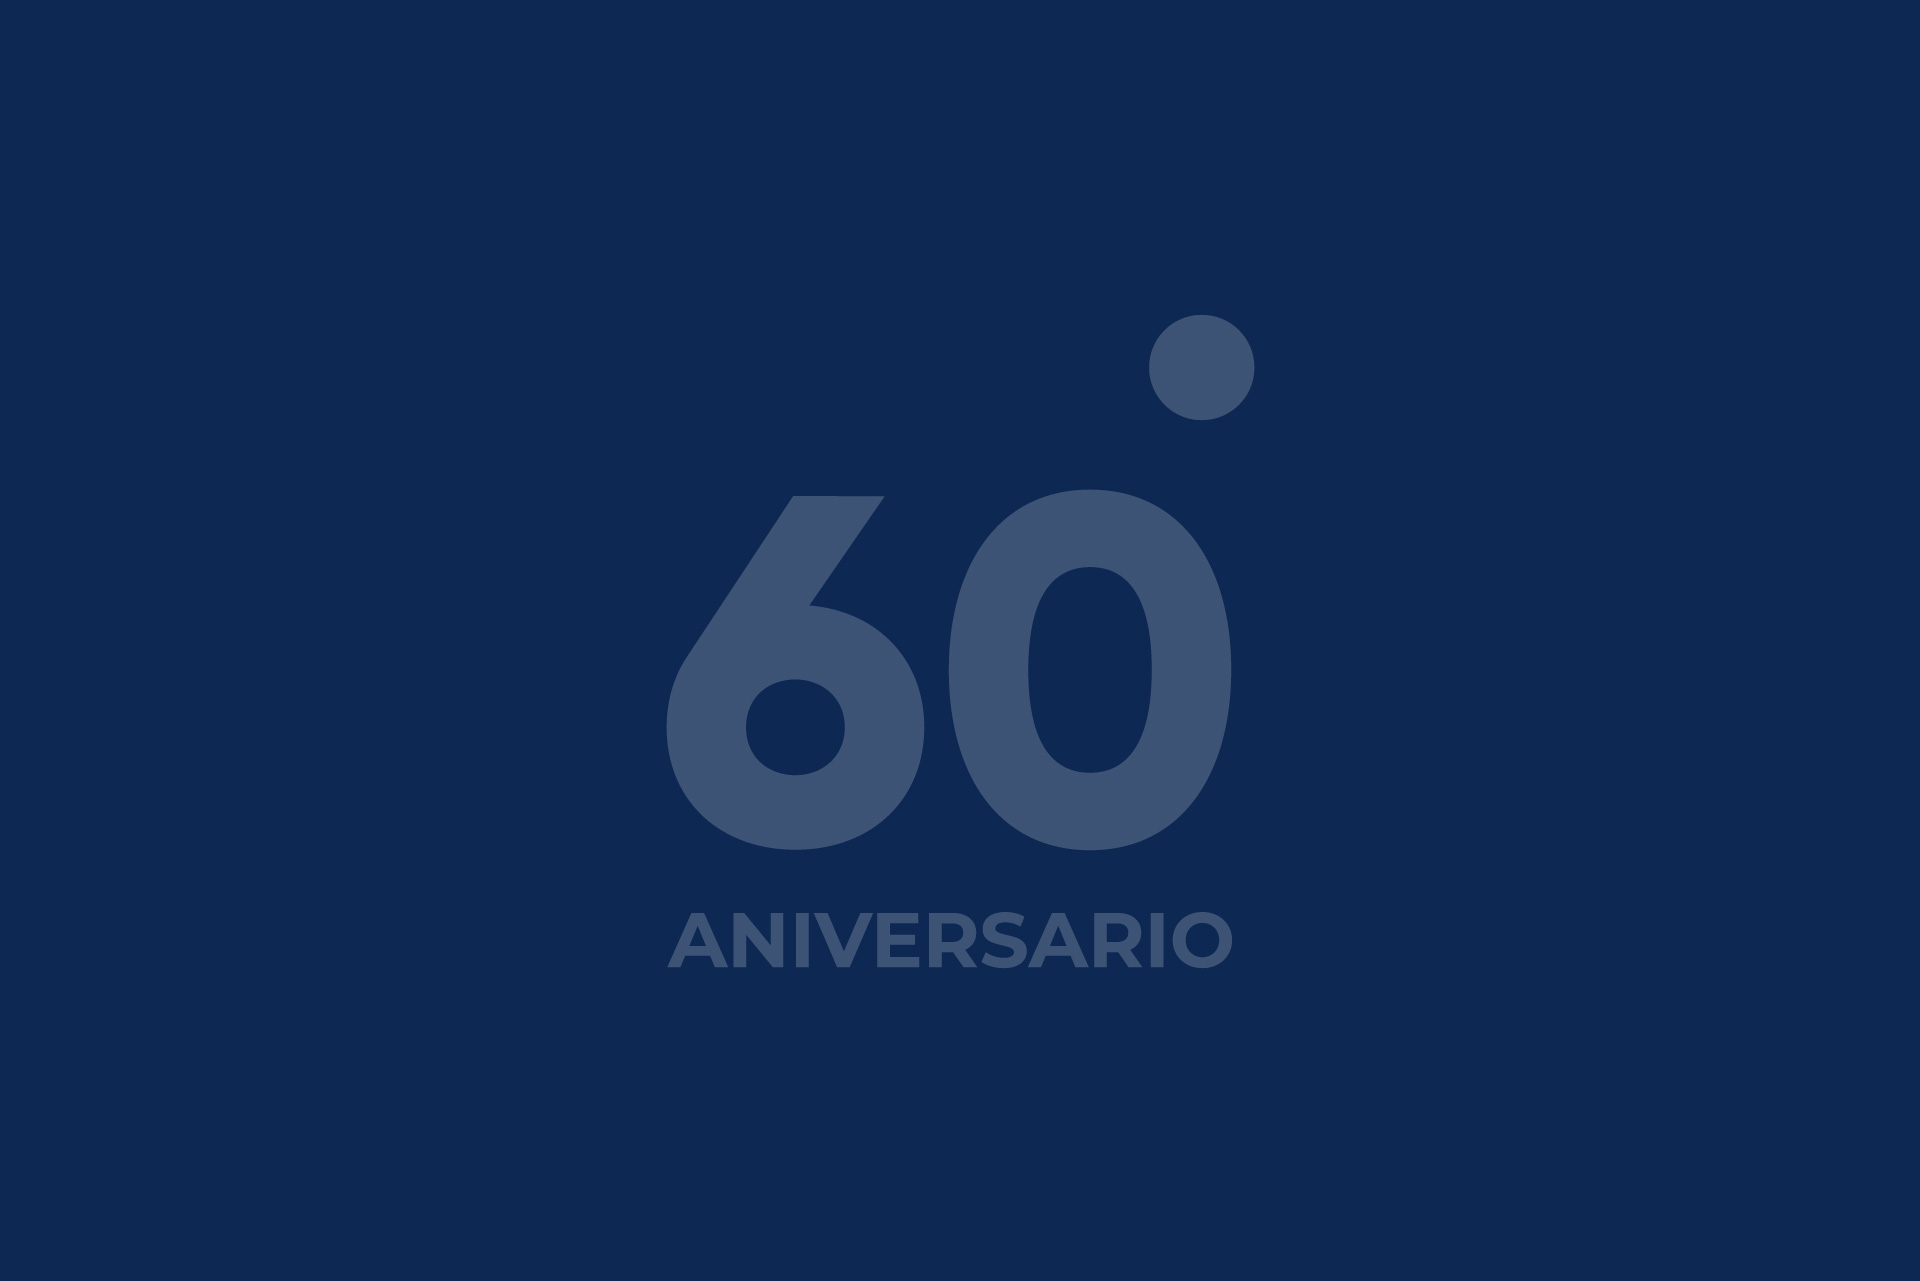 60 aniversario